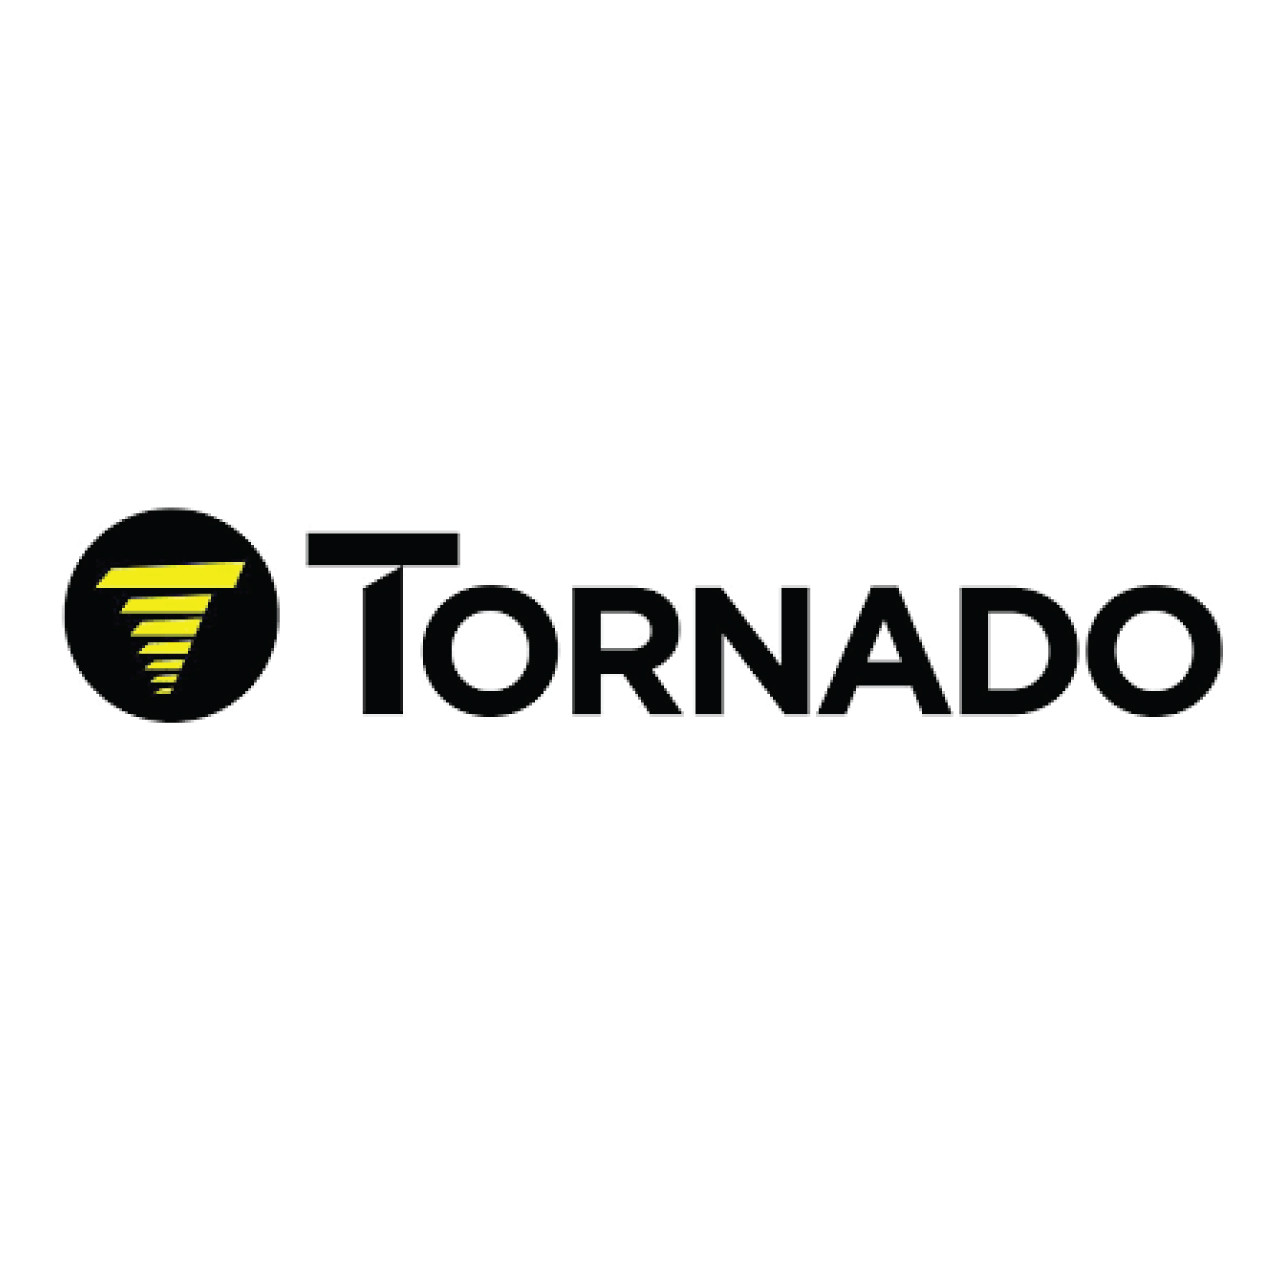 46200360, Tornado 46200360, Tornado TRACTION WHEEL ASSEMBLY, Tornado parts